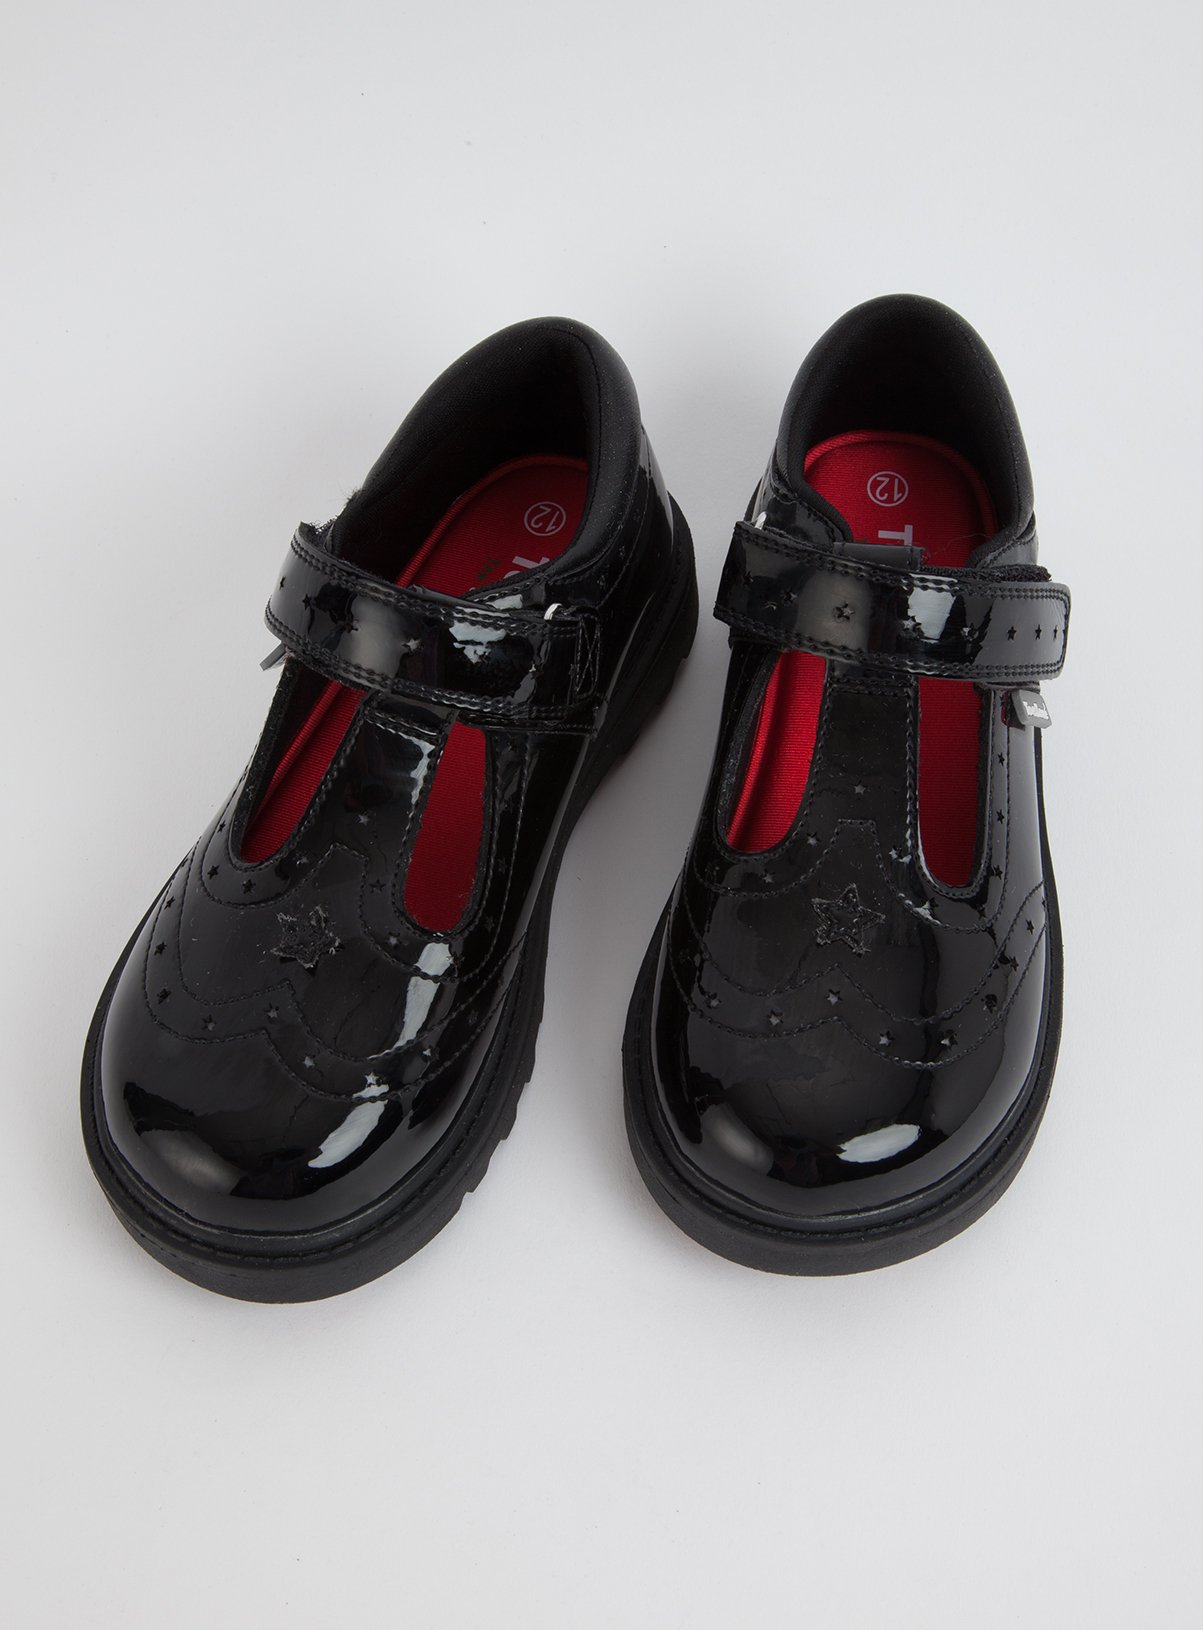 black patent chunky shoes